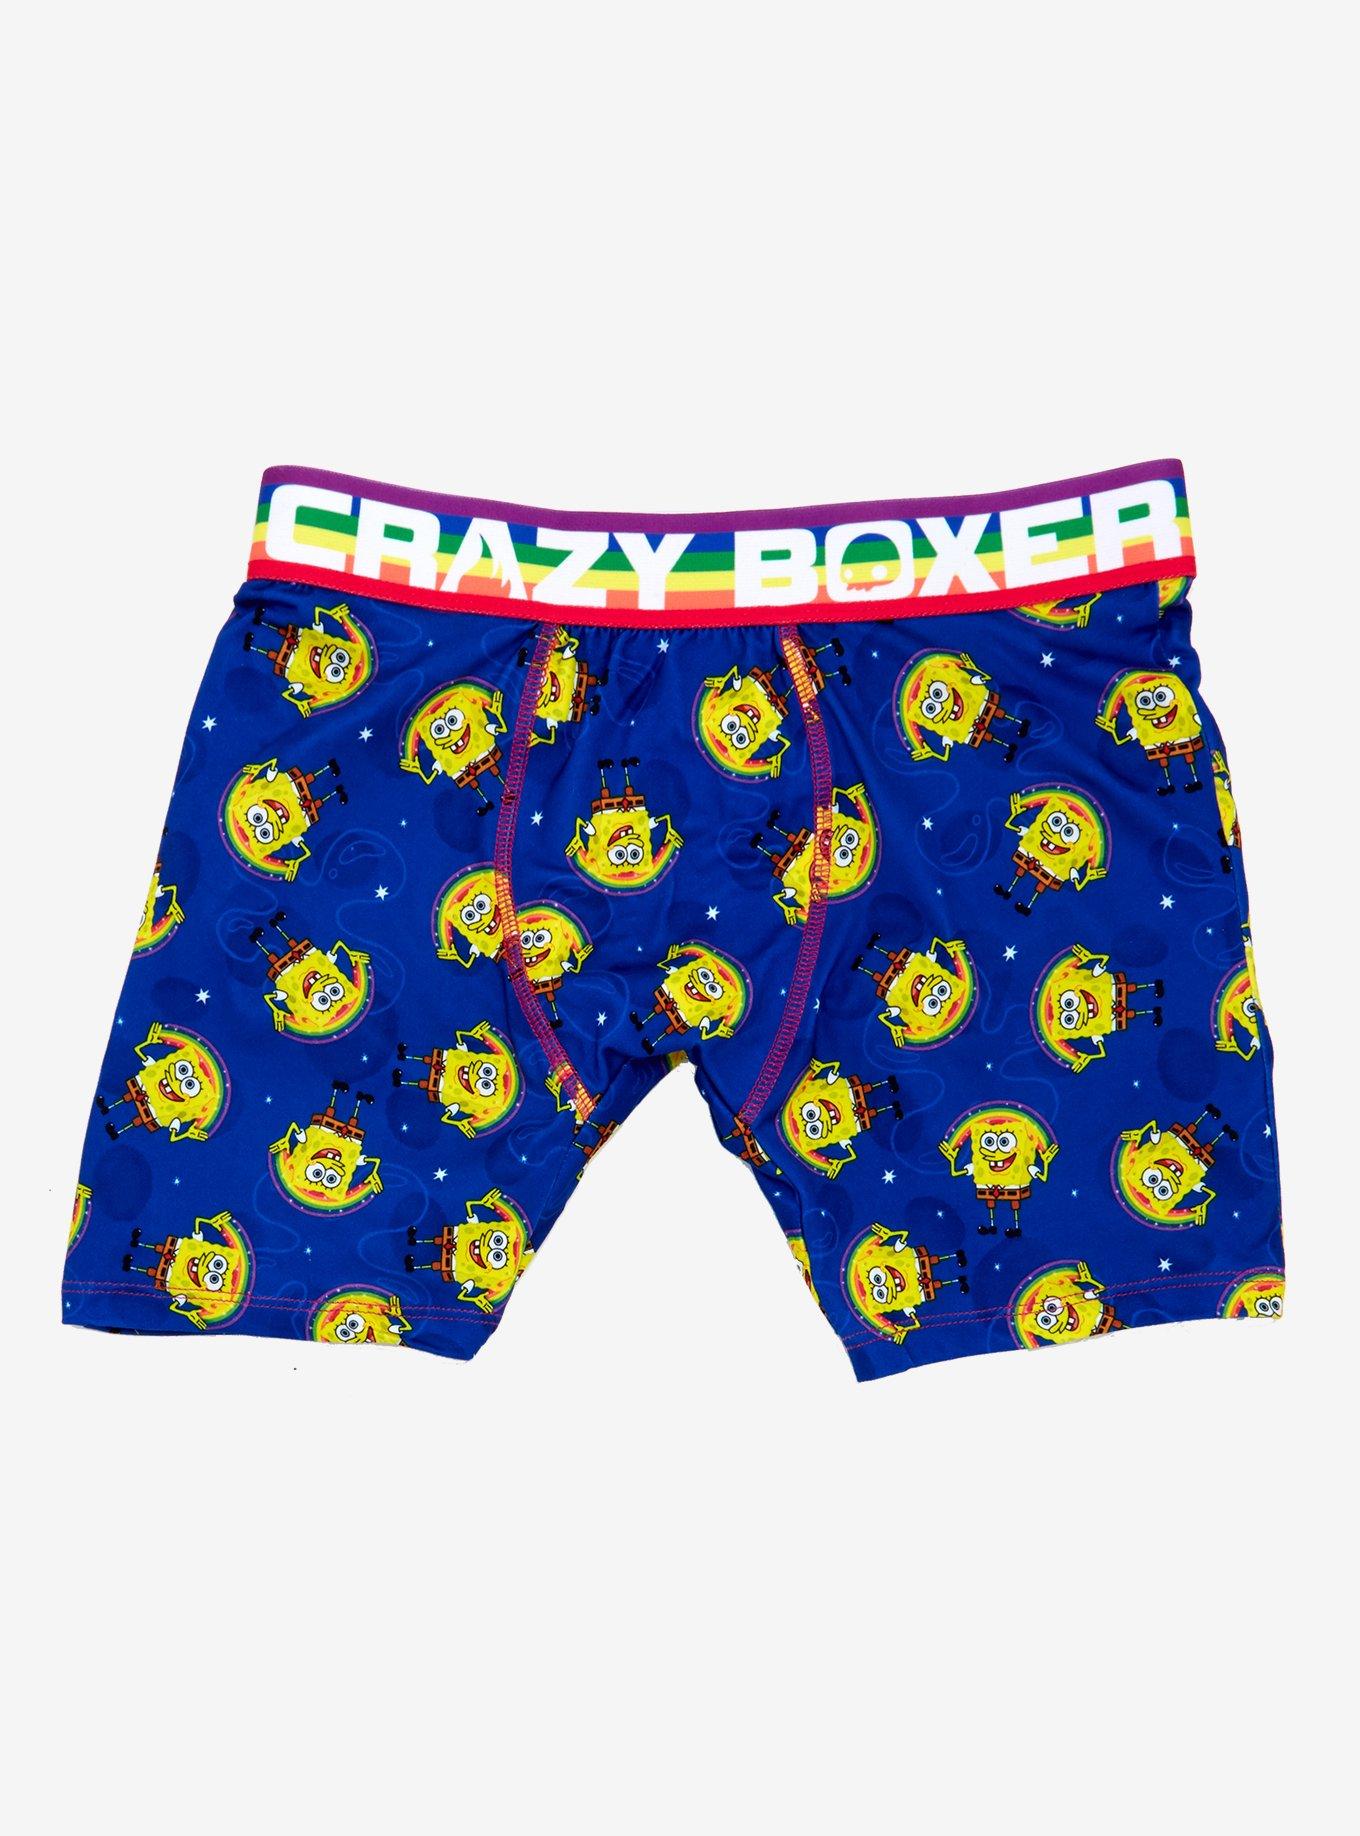 Kirby Boxers Custom Photo Boxers Men's Underwear Little Star Boxers Black